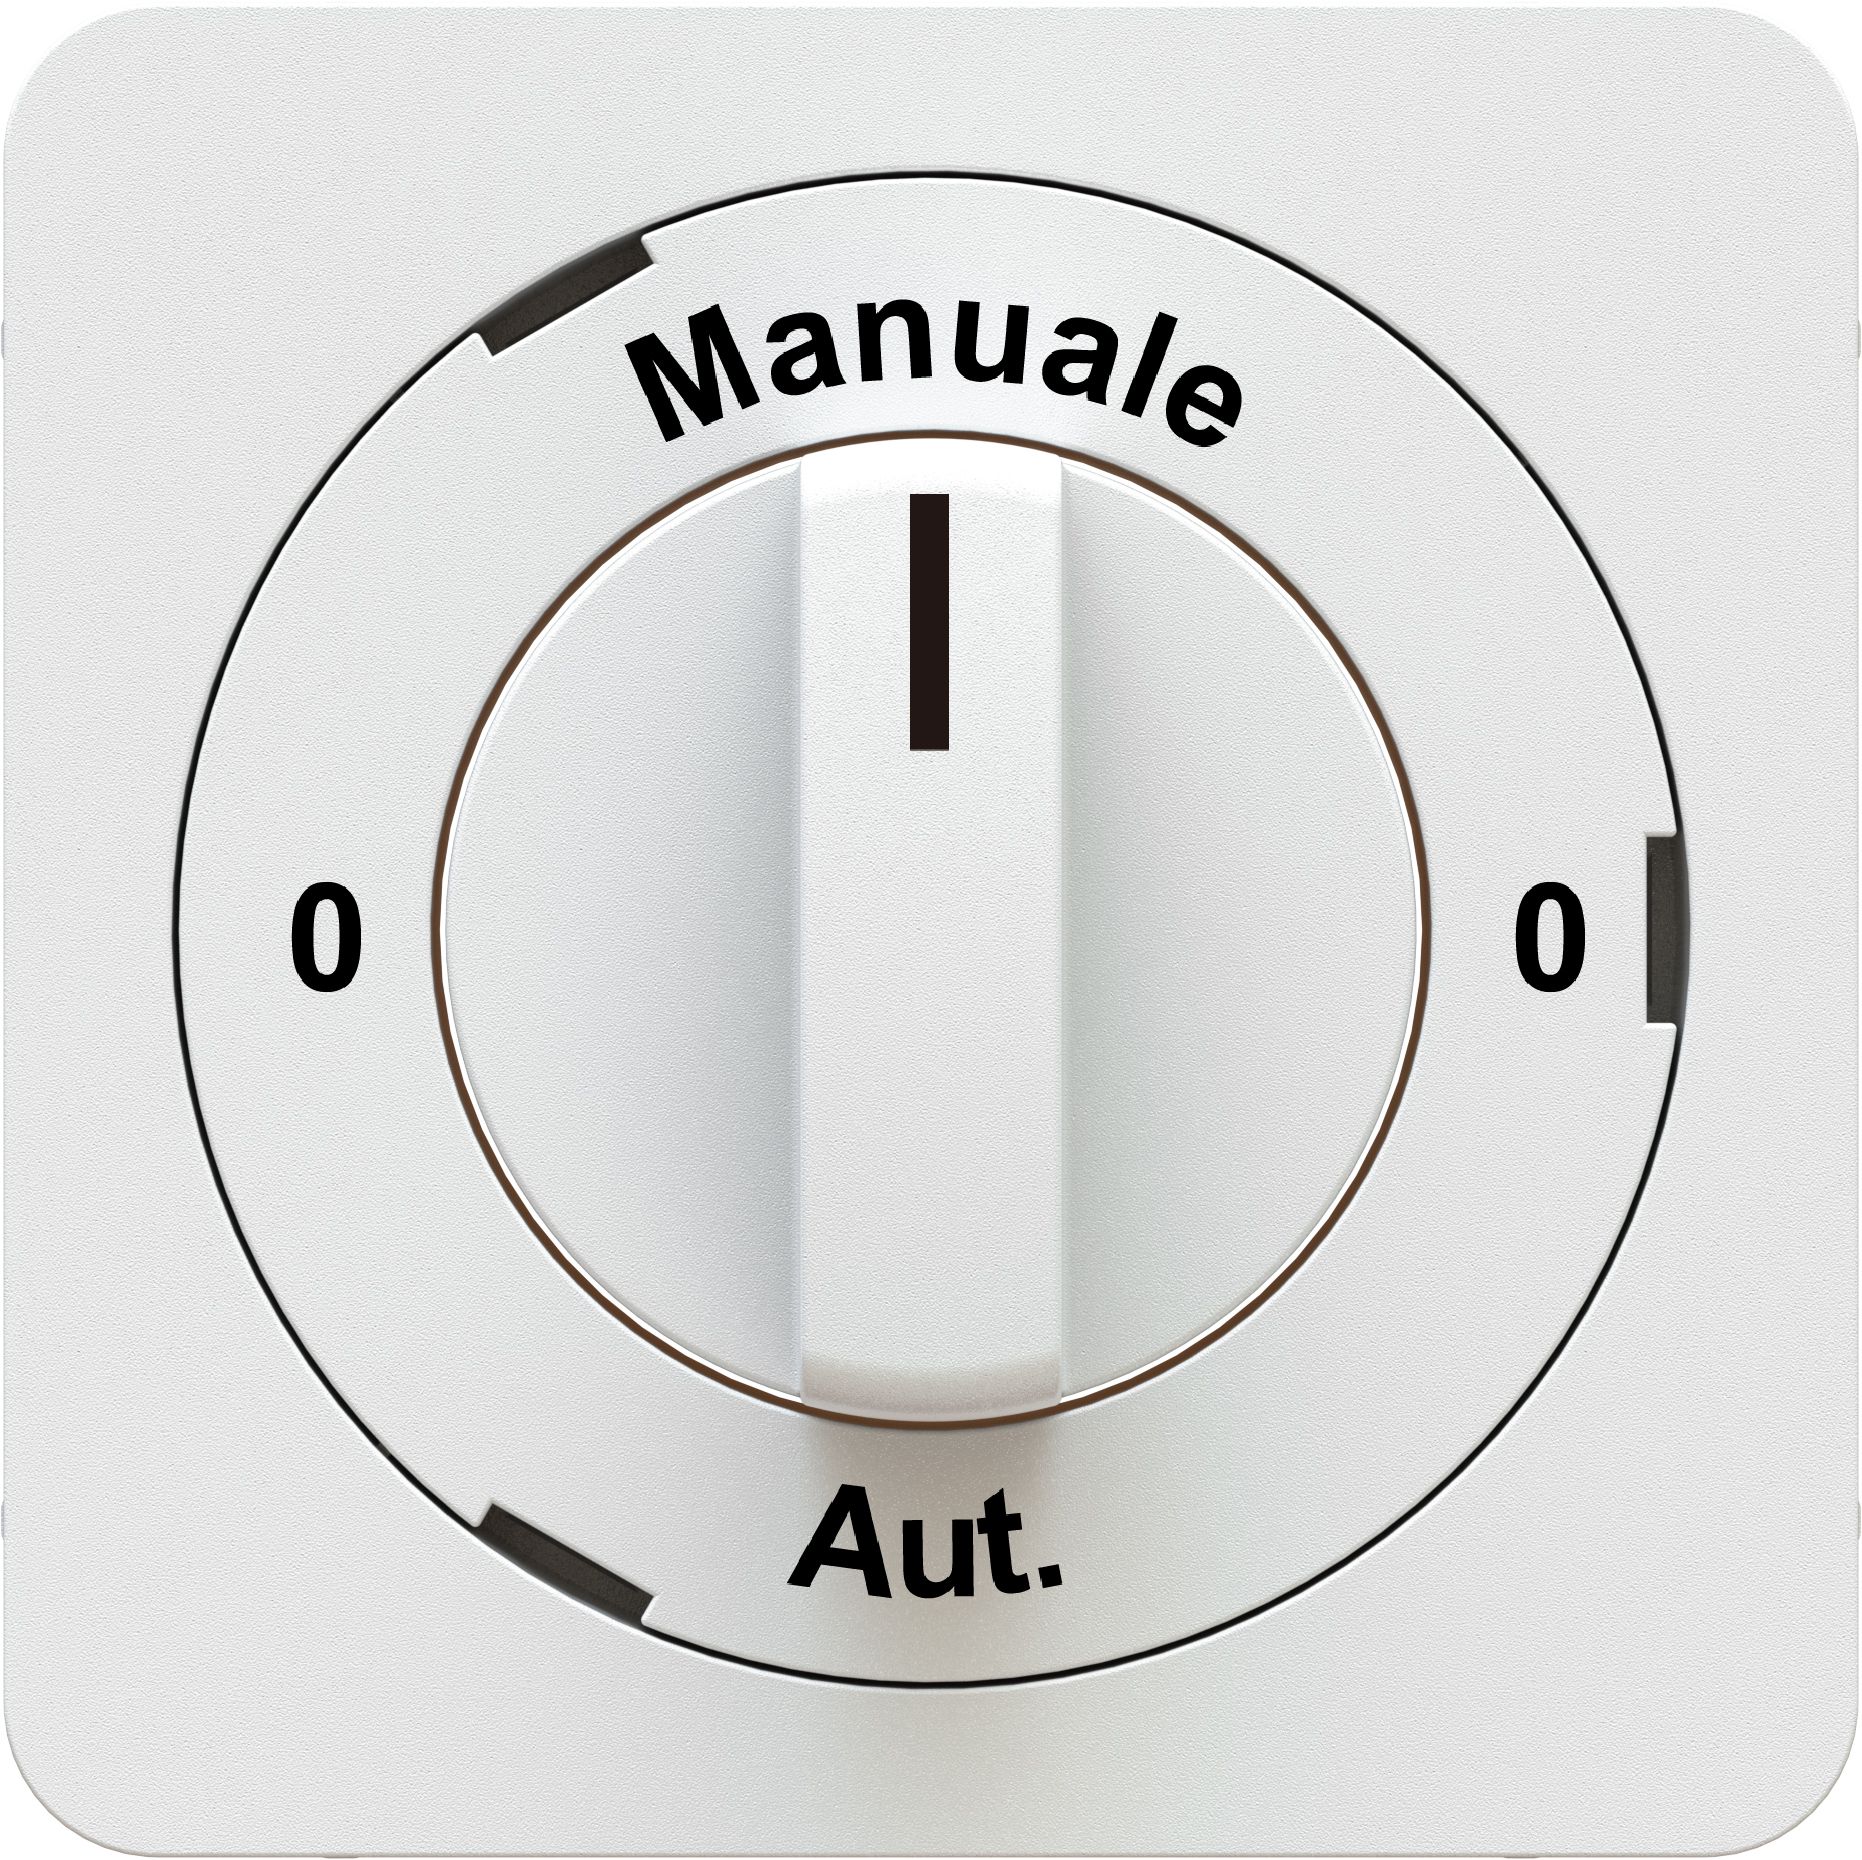 interruttore rotativo/a chiave 0-Manuale-0-Aut. pl.fr. priamos bi